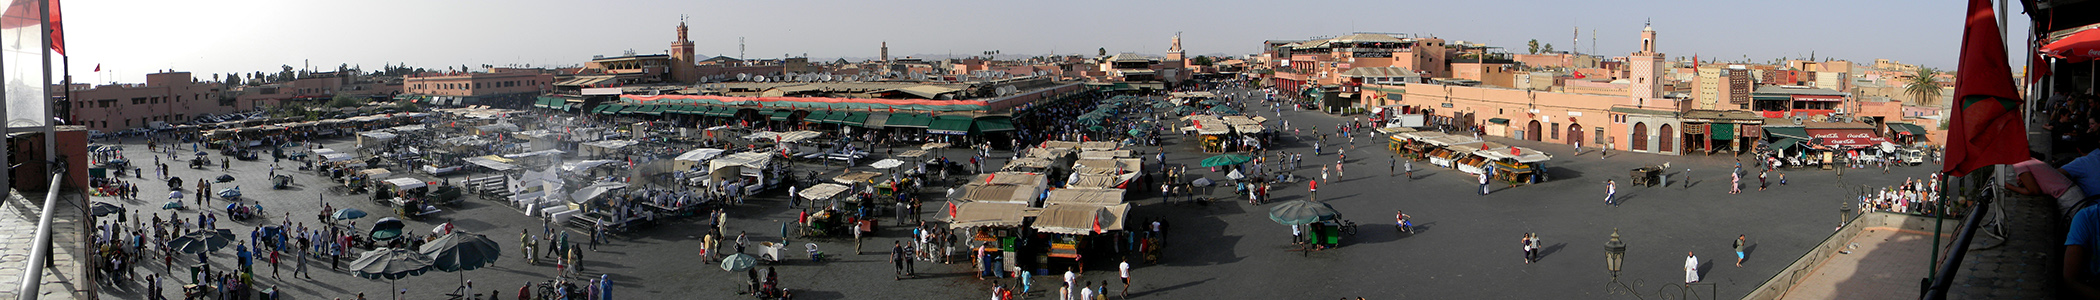 Marrakesh banner